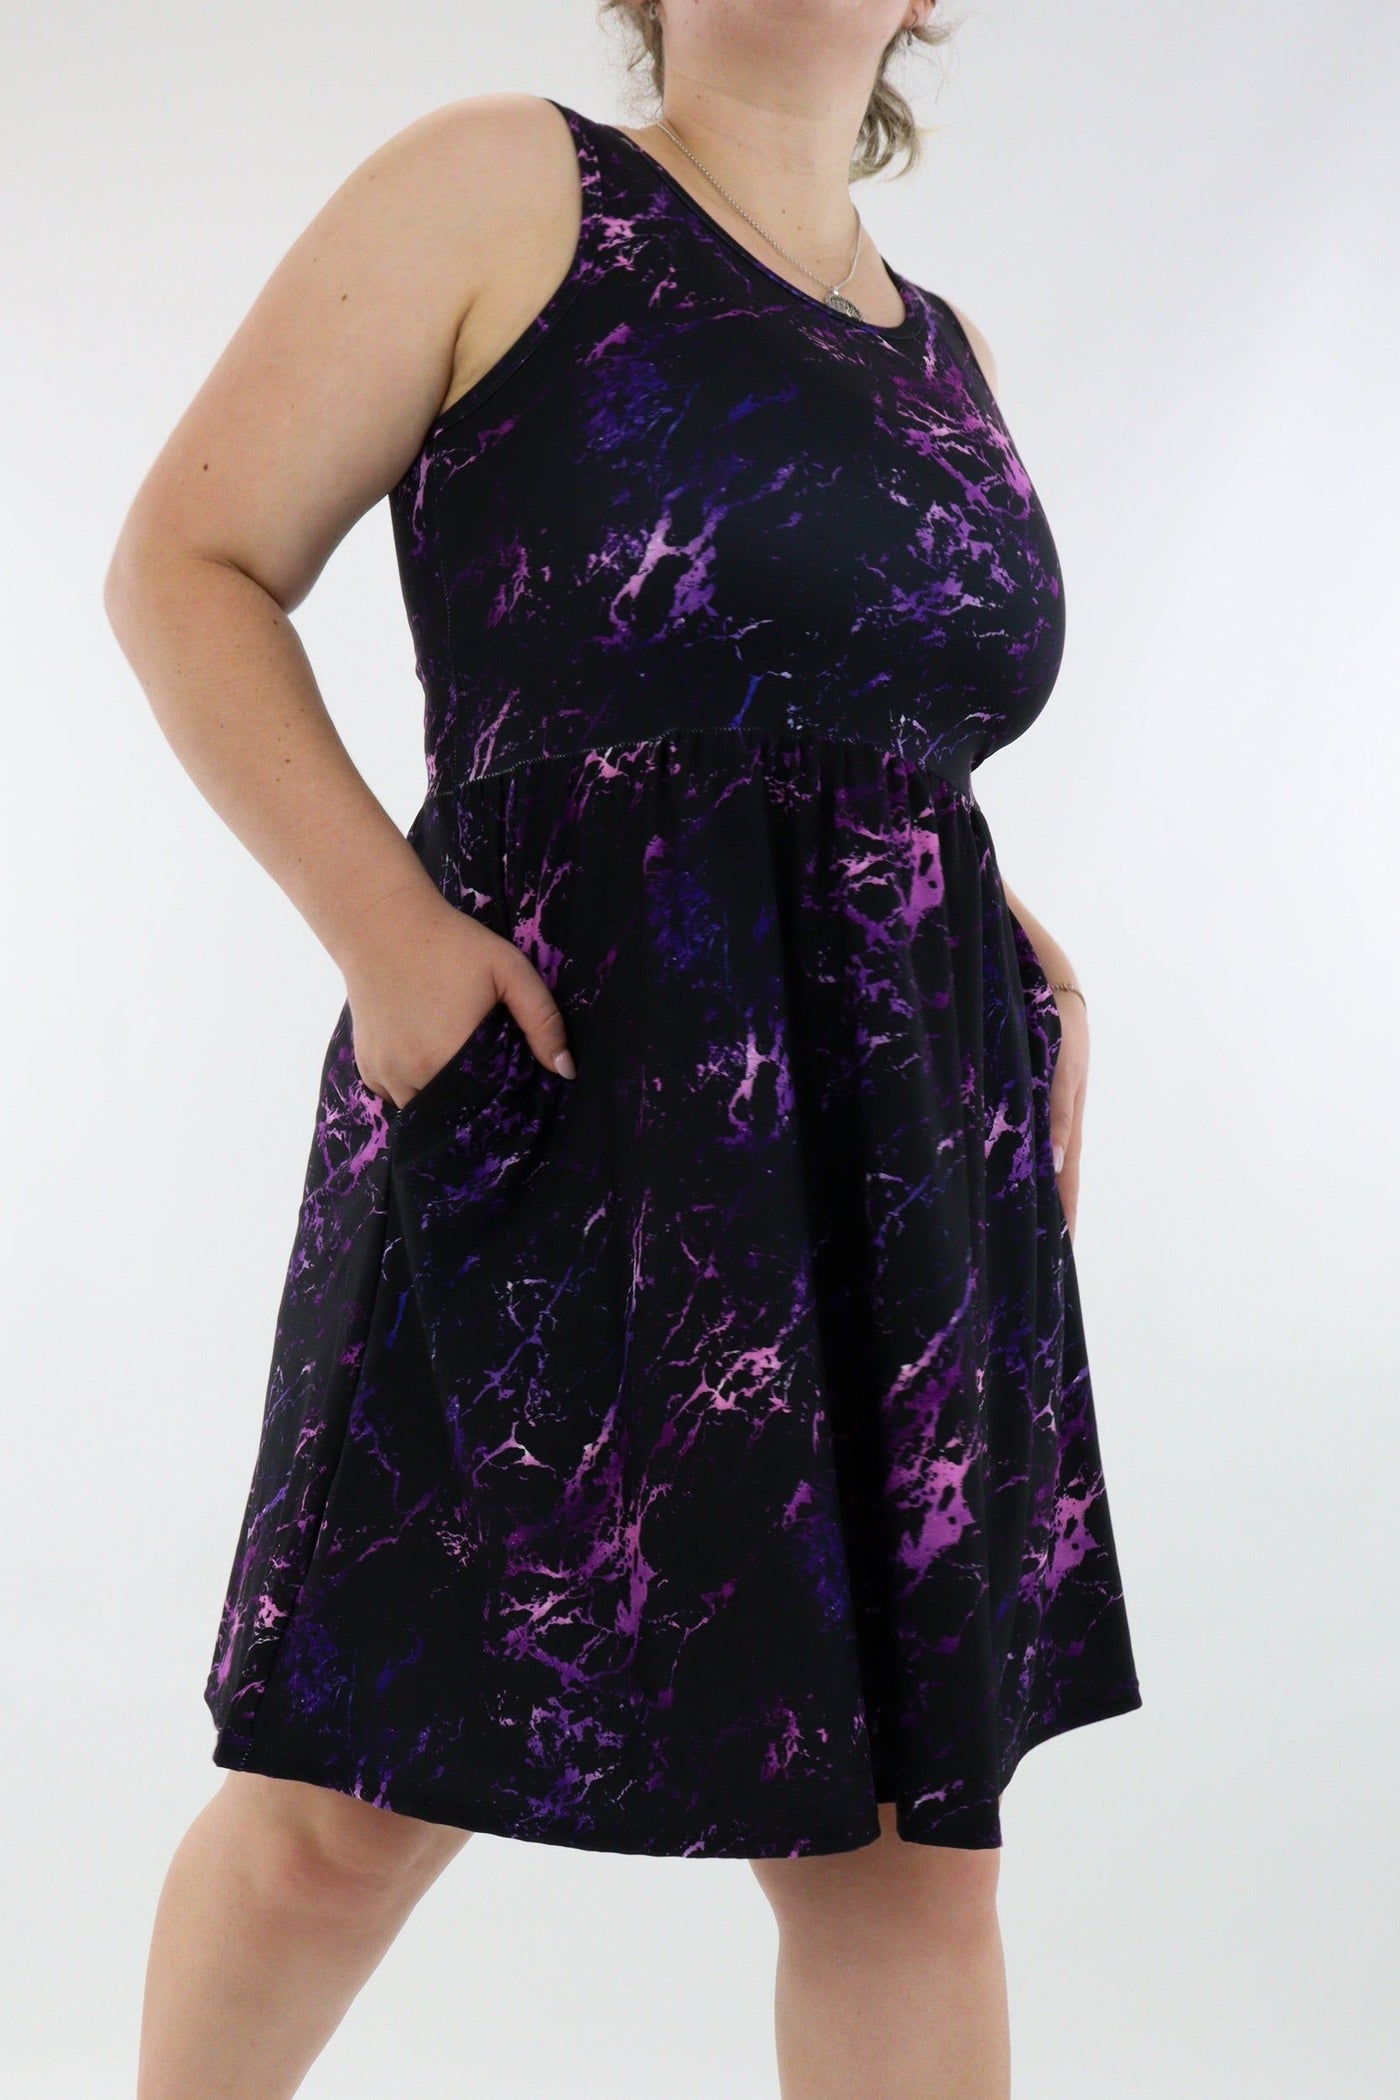 Purple Marble - Sleeveless Skater Dress - Knee Length - Side Pockets - Pawlie